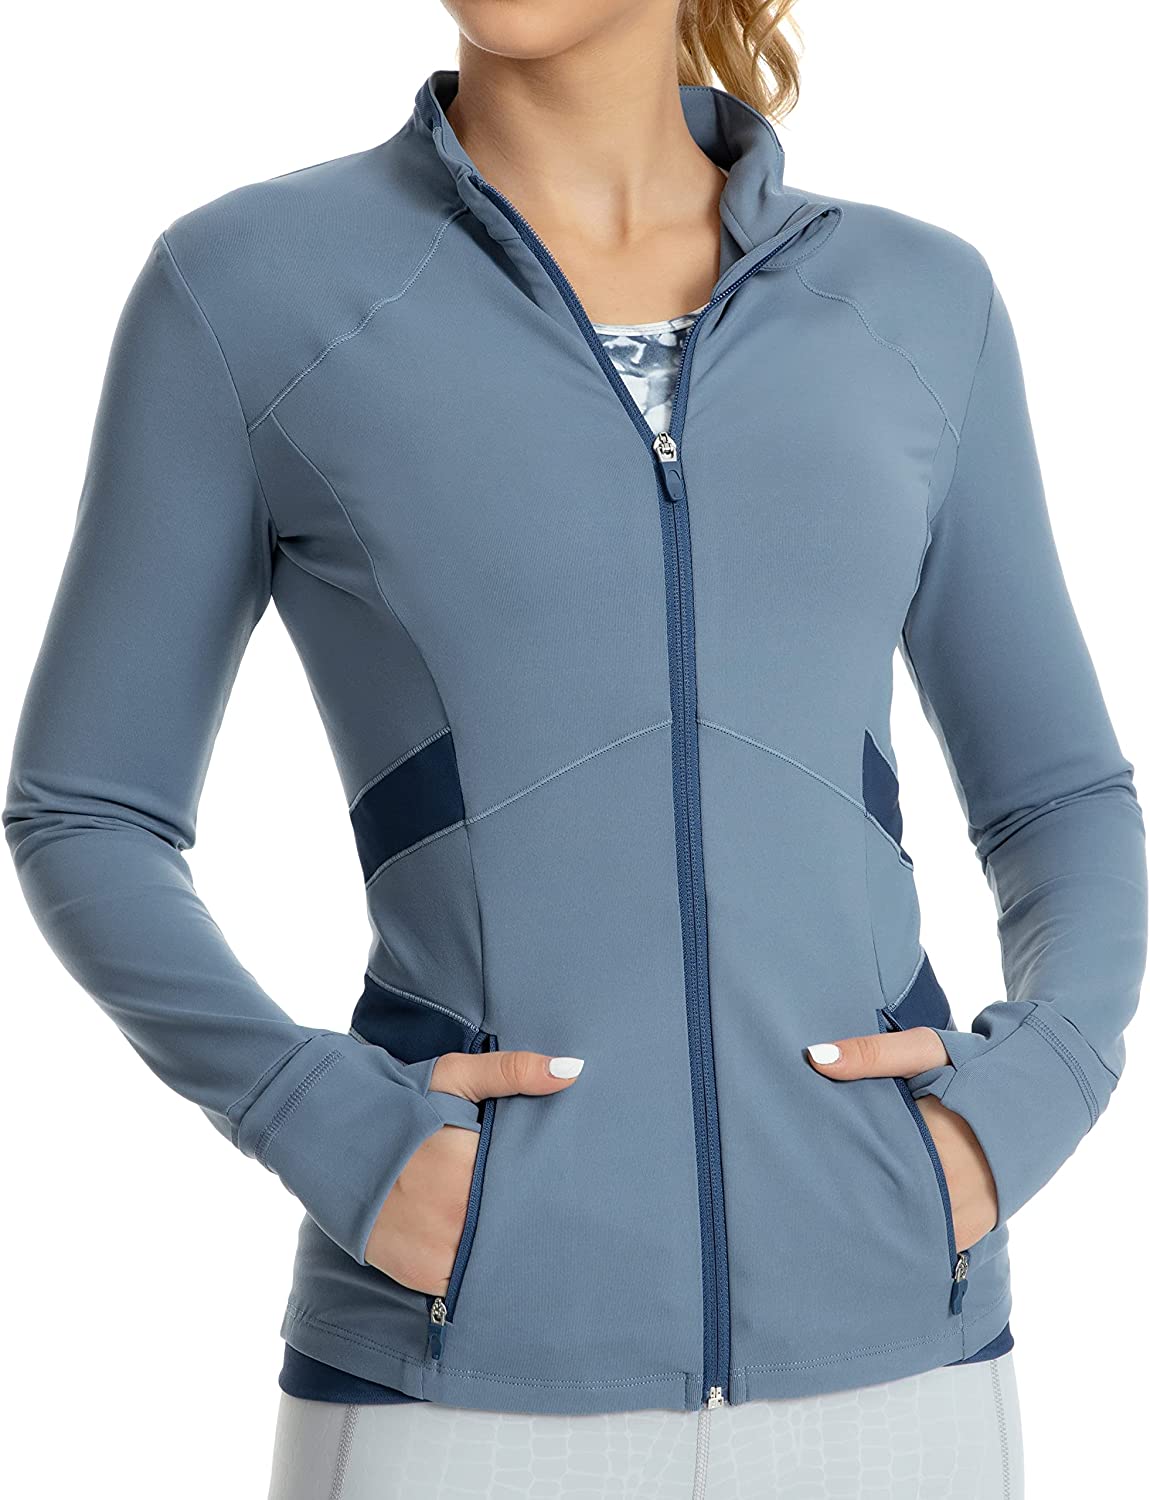 QUEENIEKE Women's Sports Jacket Slim Fit Running Jacket Cottony-Soft  Handfeel 60 | eBay